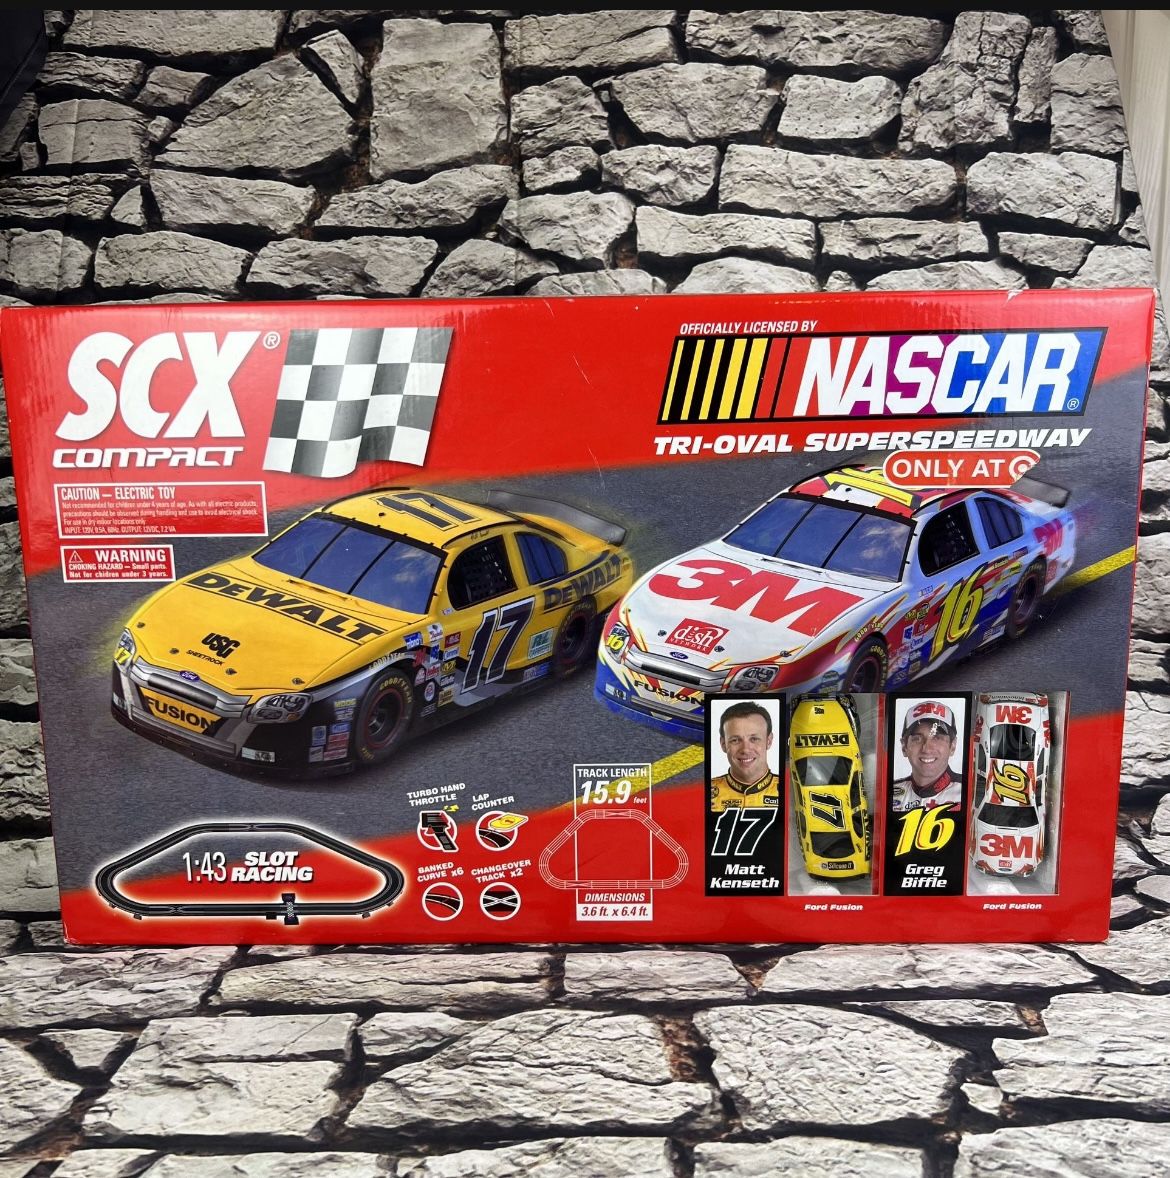 SCX NASCAR Compact Slot Racing Car Bundle 2008 3M Dewalt